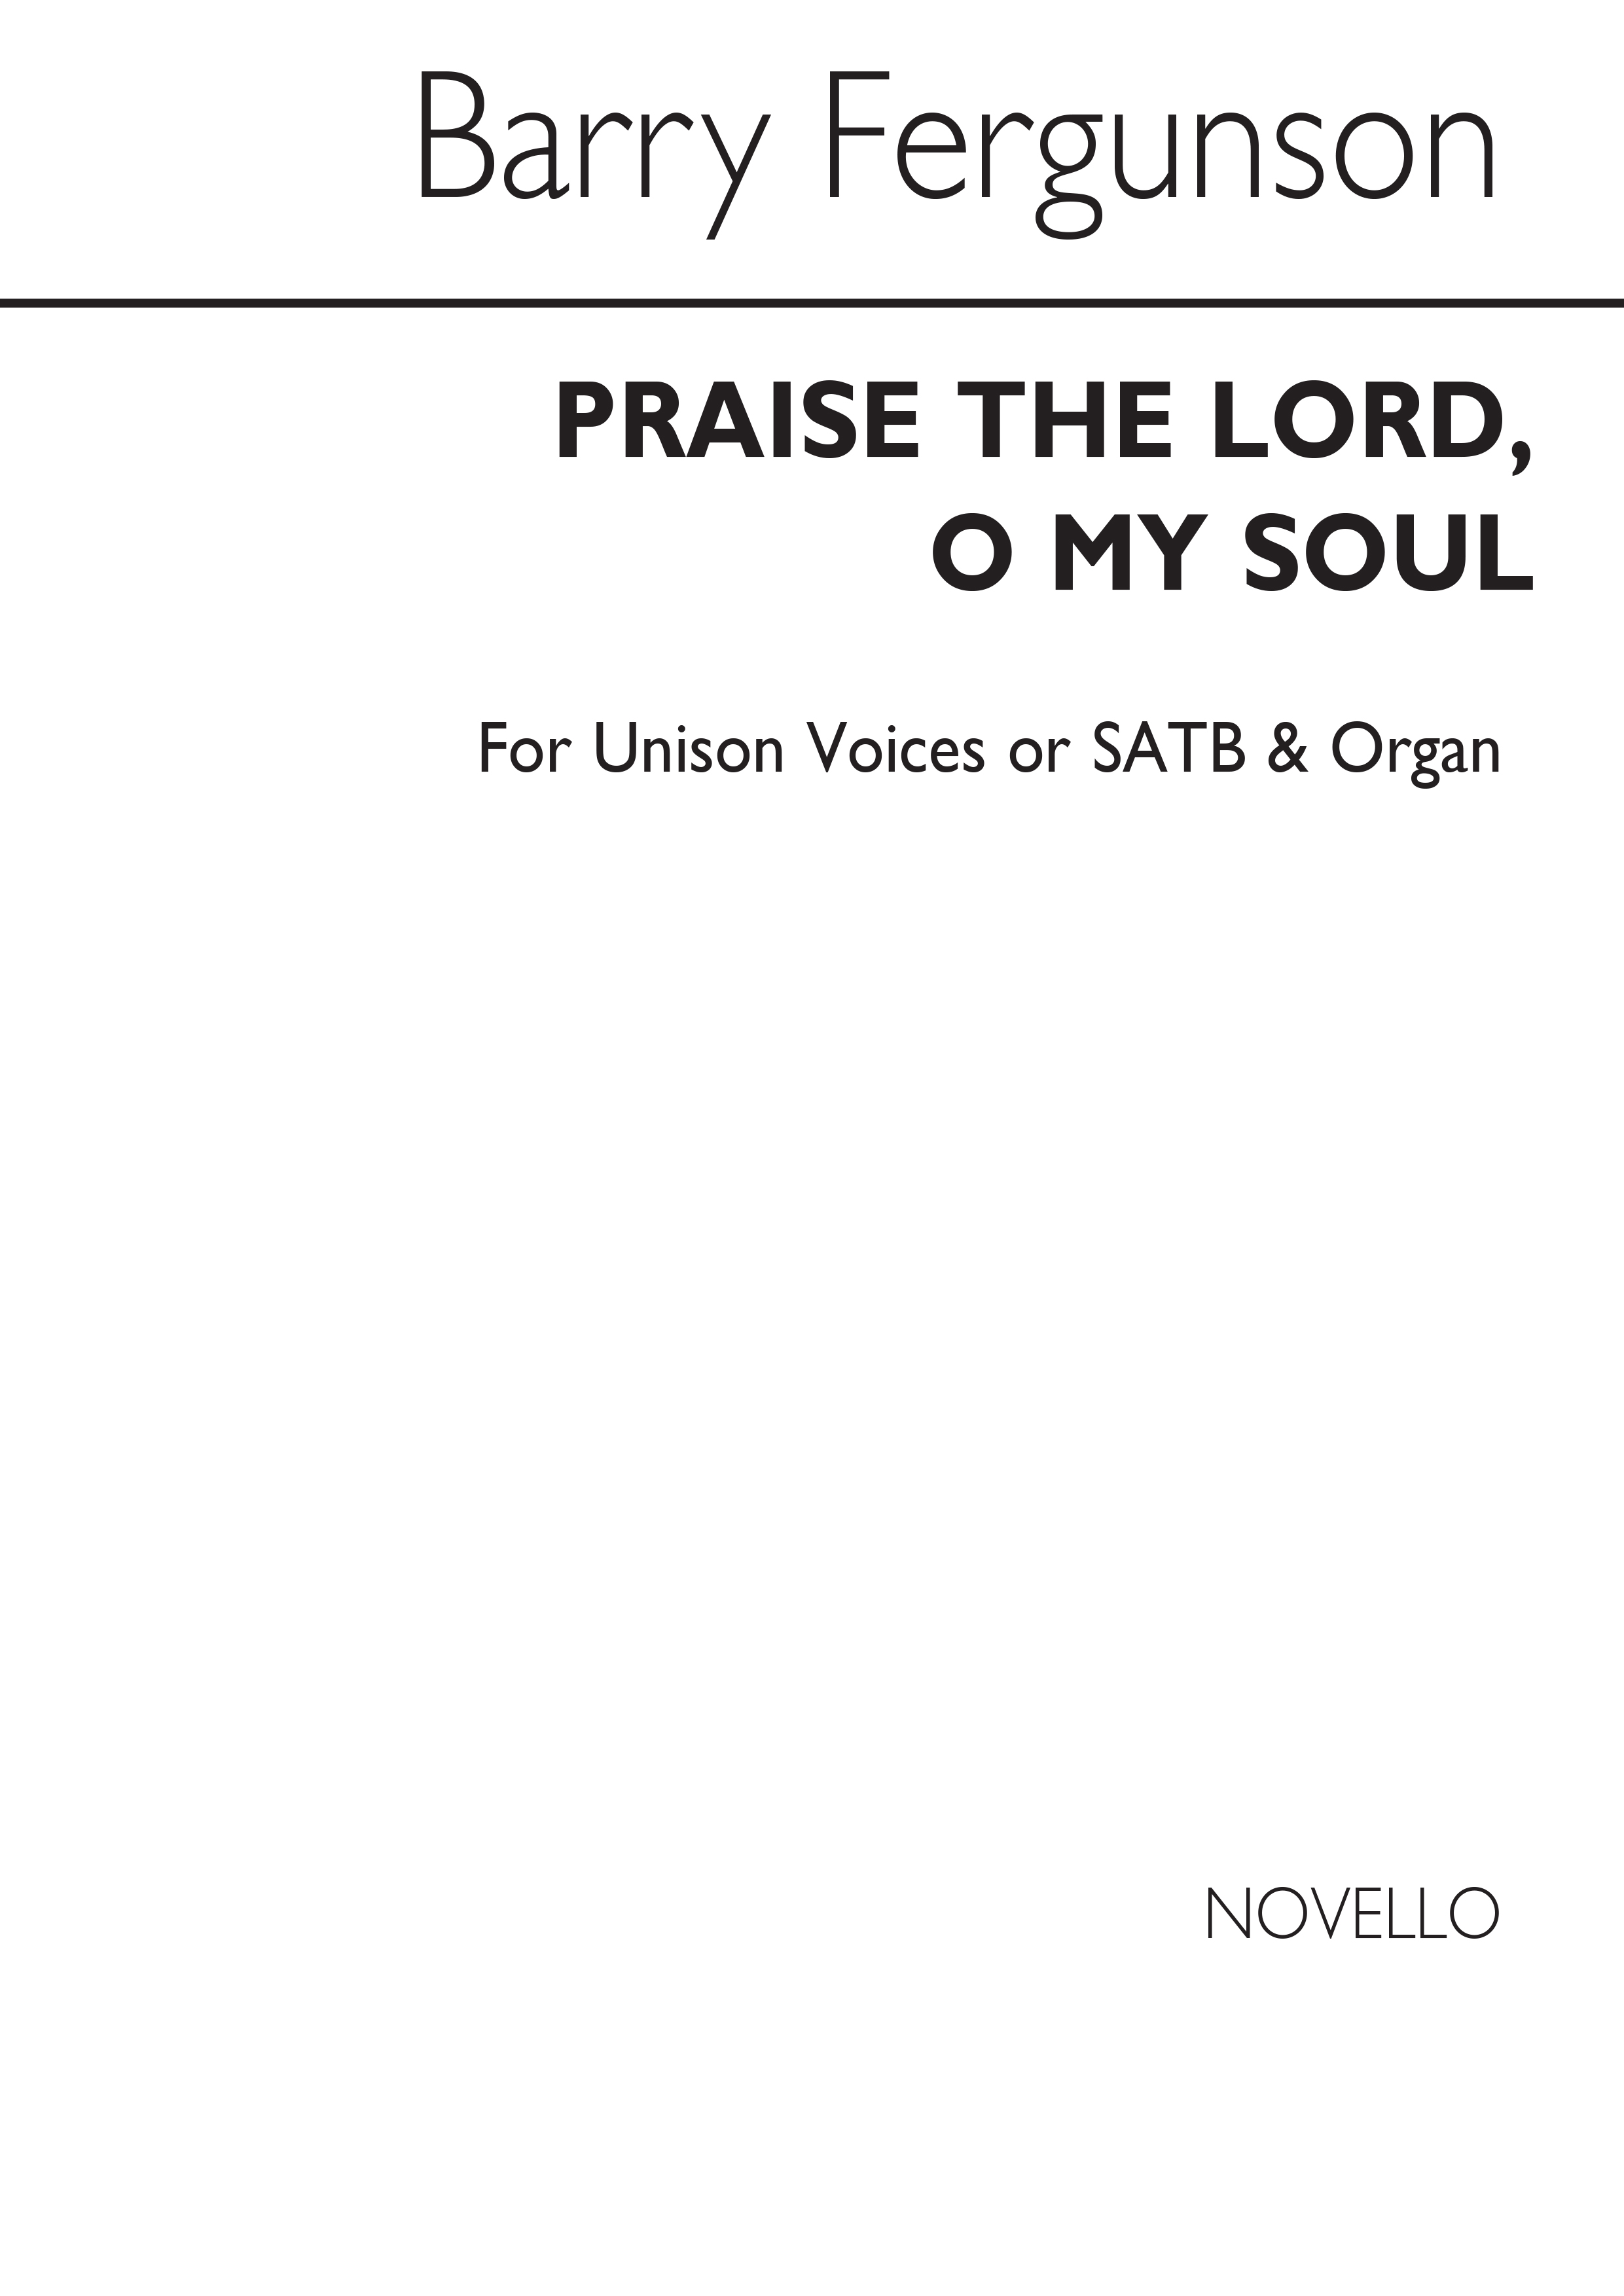 Barry Ferguson: Praise The Lord